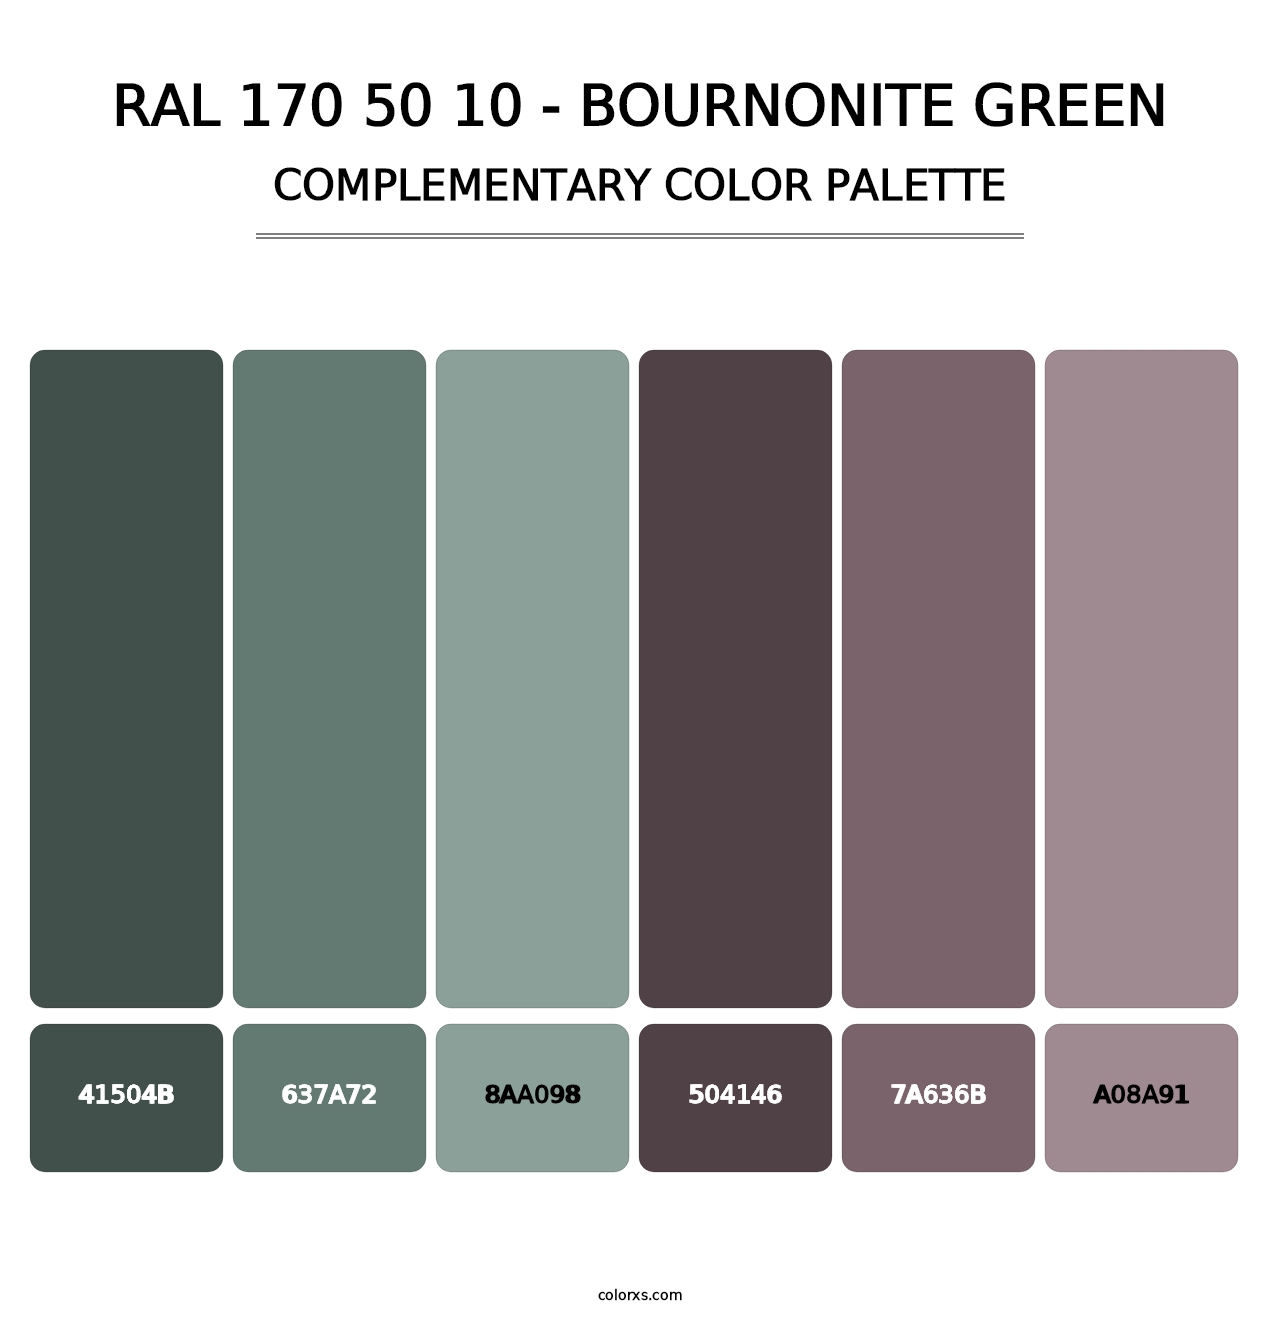 RAL 170 50 10 - Bournonite Green - Complementary Color Palette